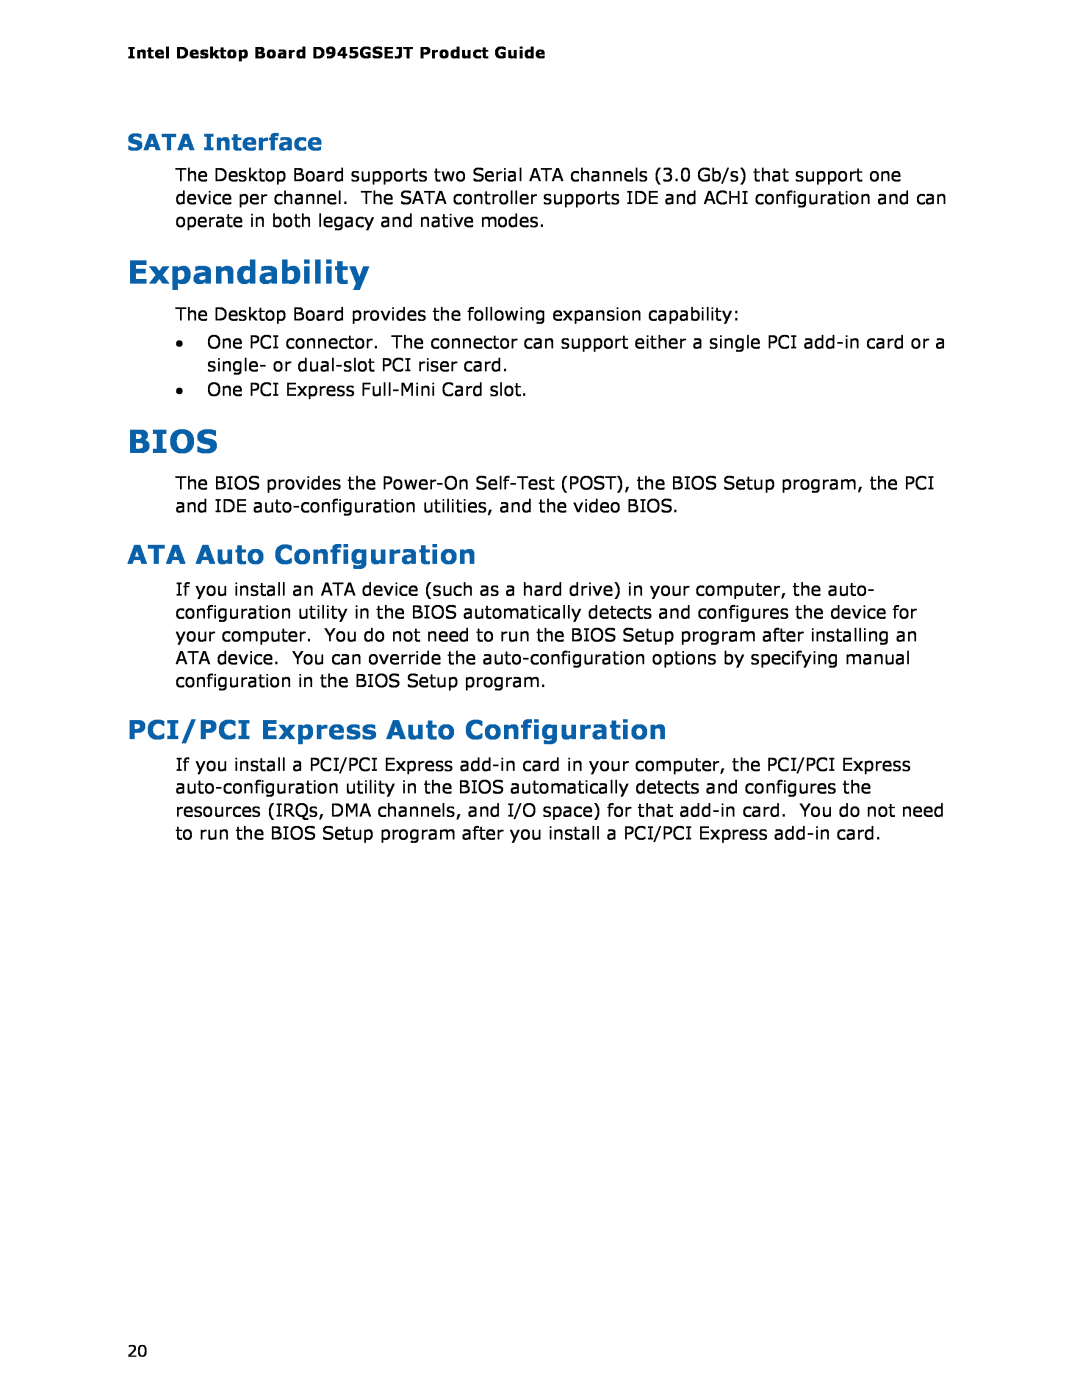 Intel D945GSEJT manual Expandability, Bios, ATA Auto Configuration, PCI/PCI Express Auto Configuration, SATA Interface 